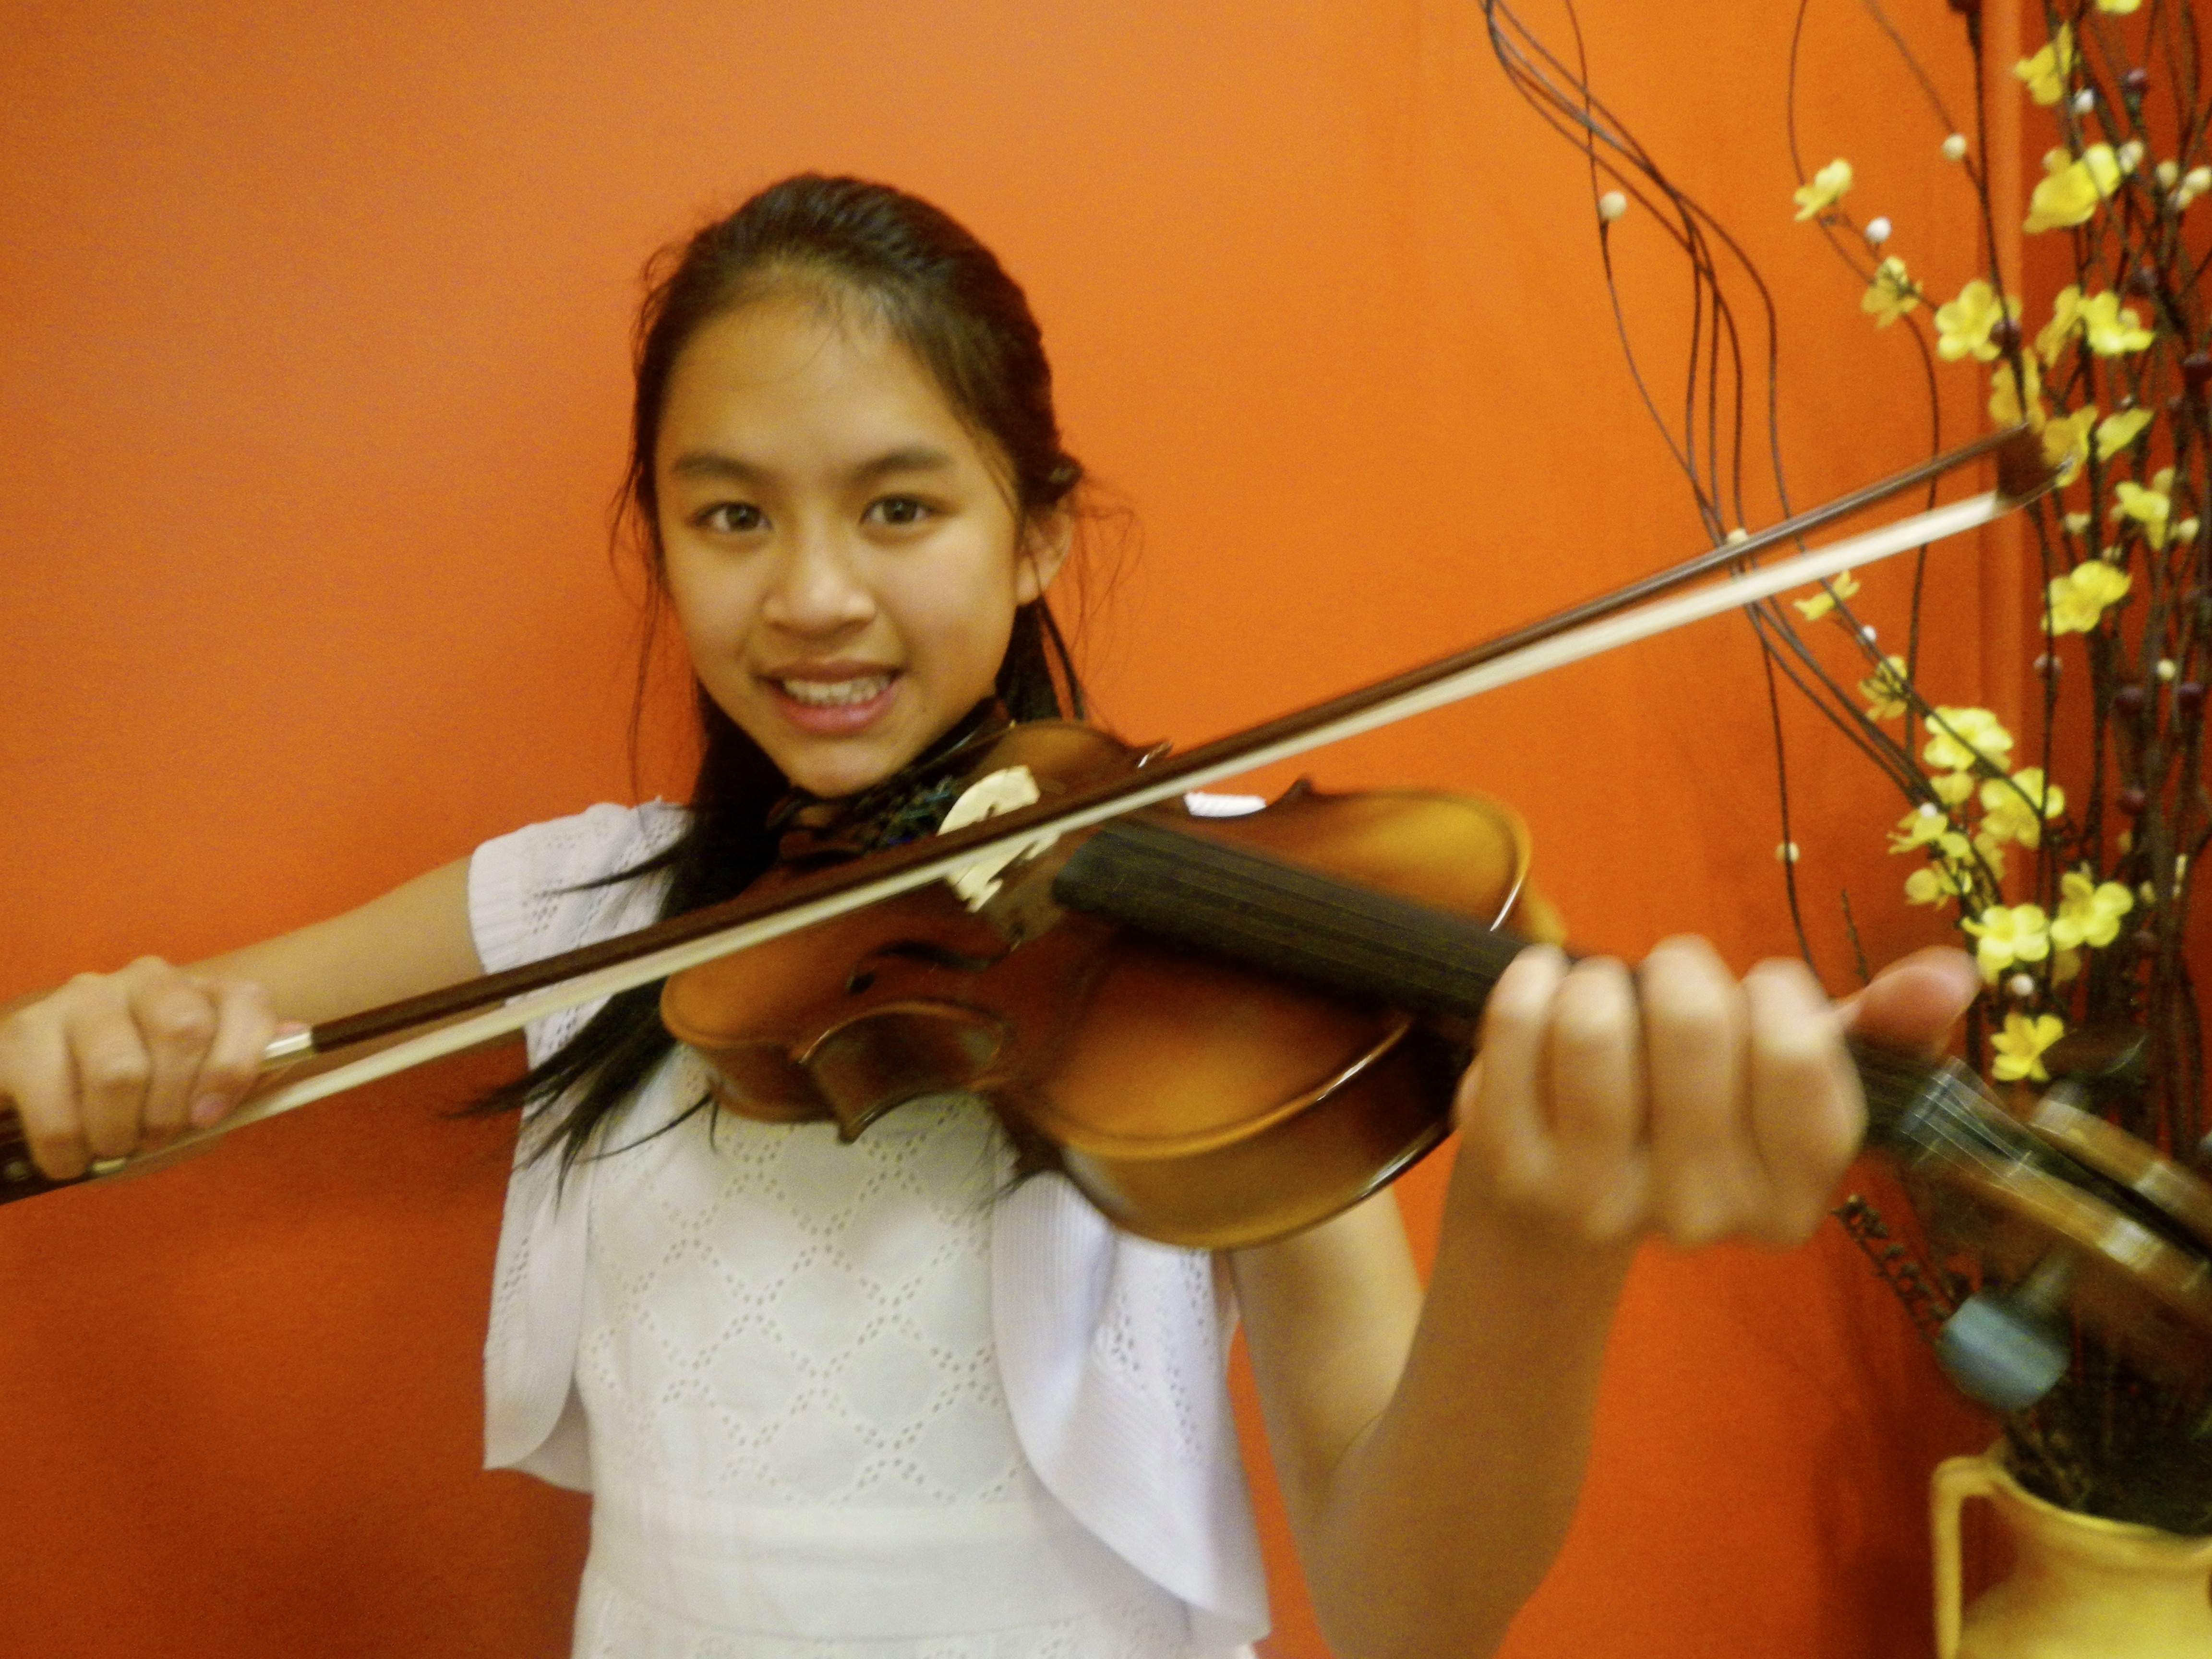 1 Kimberly playing Violin